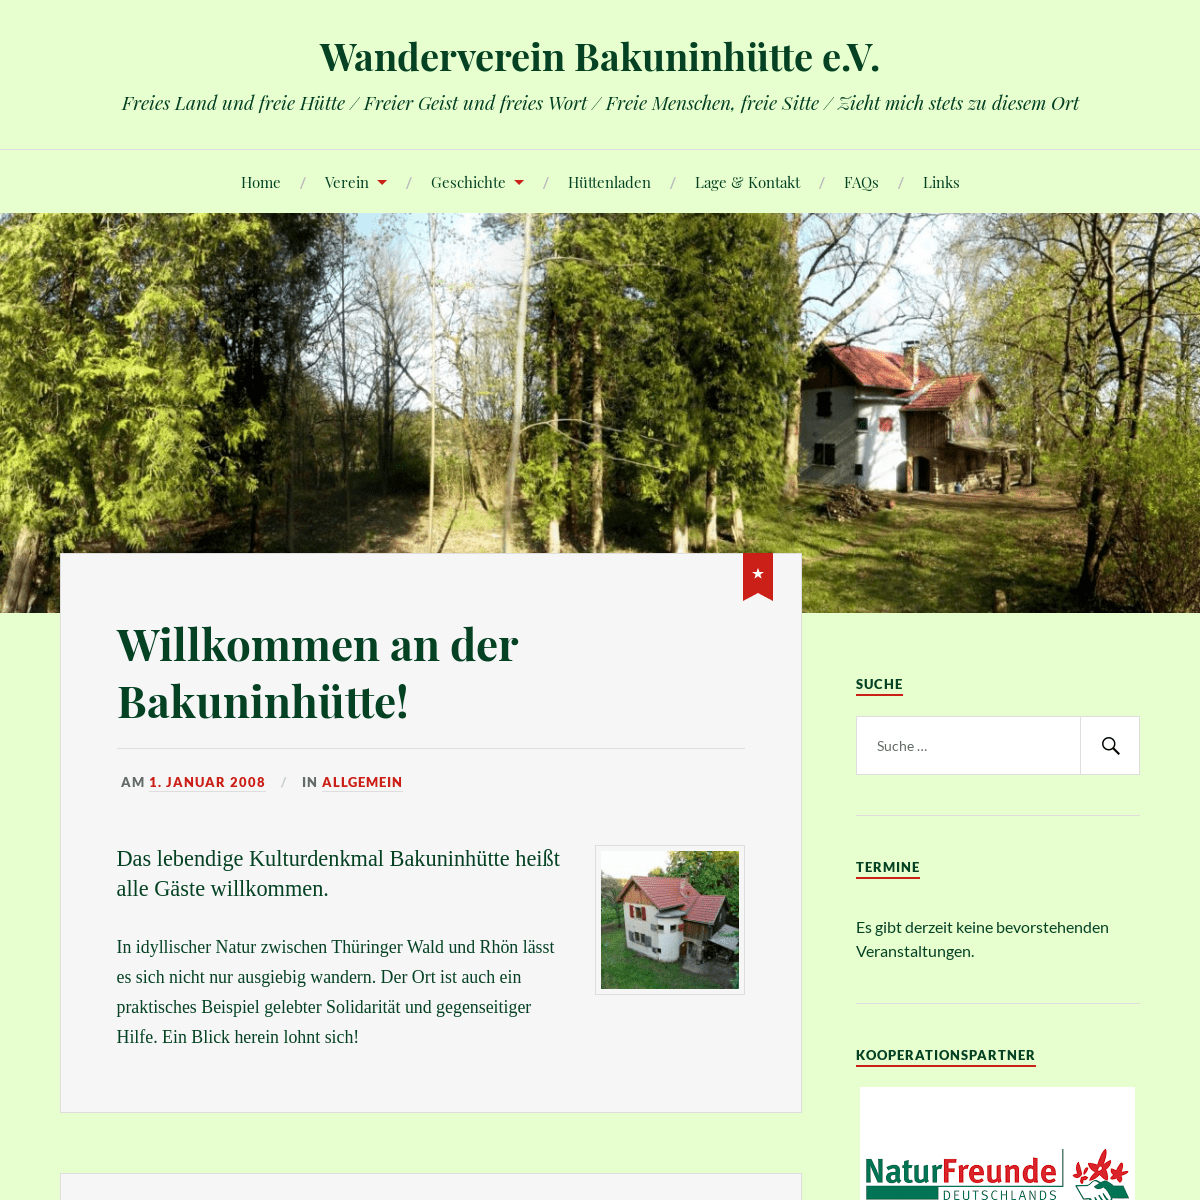 A complete backup of bakuninhuette.de